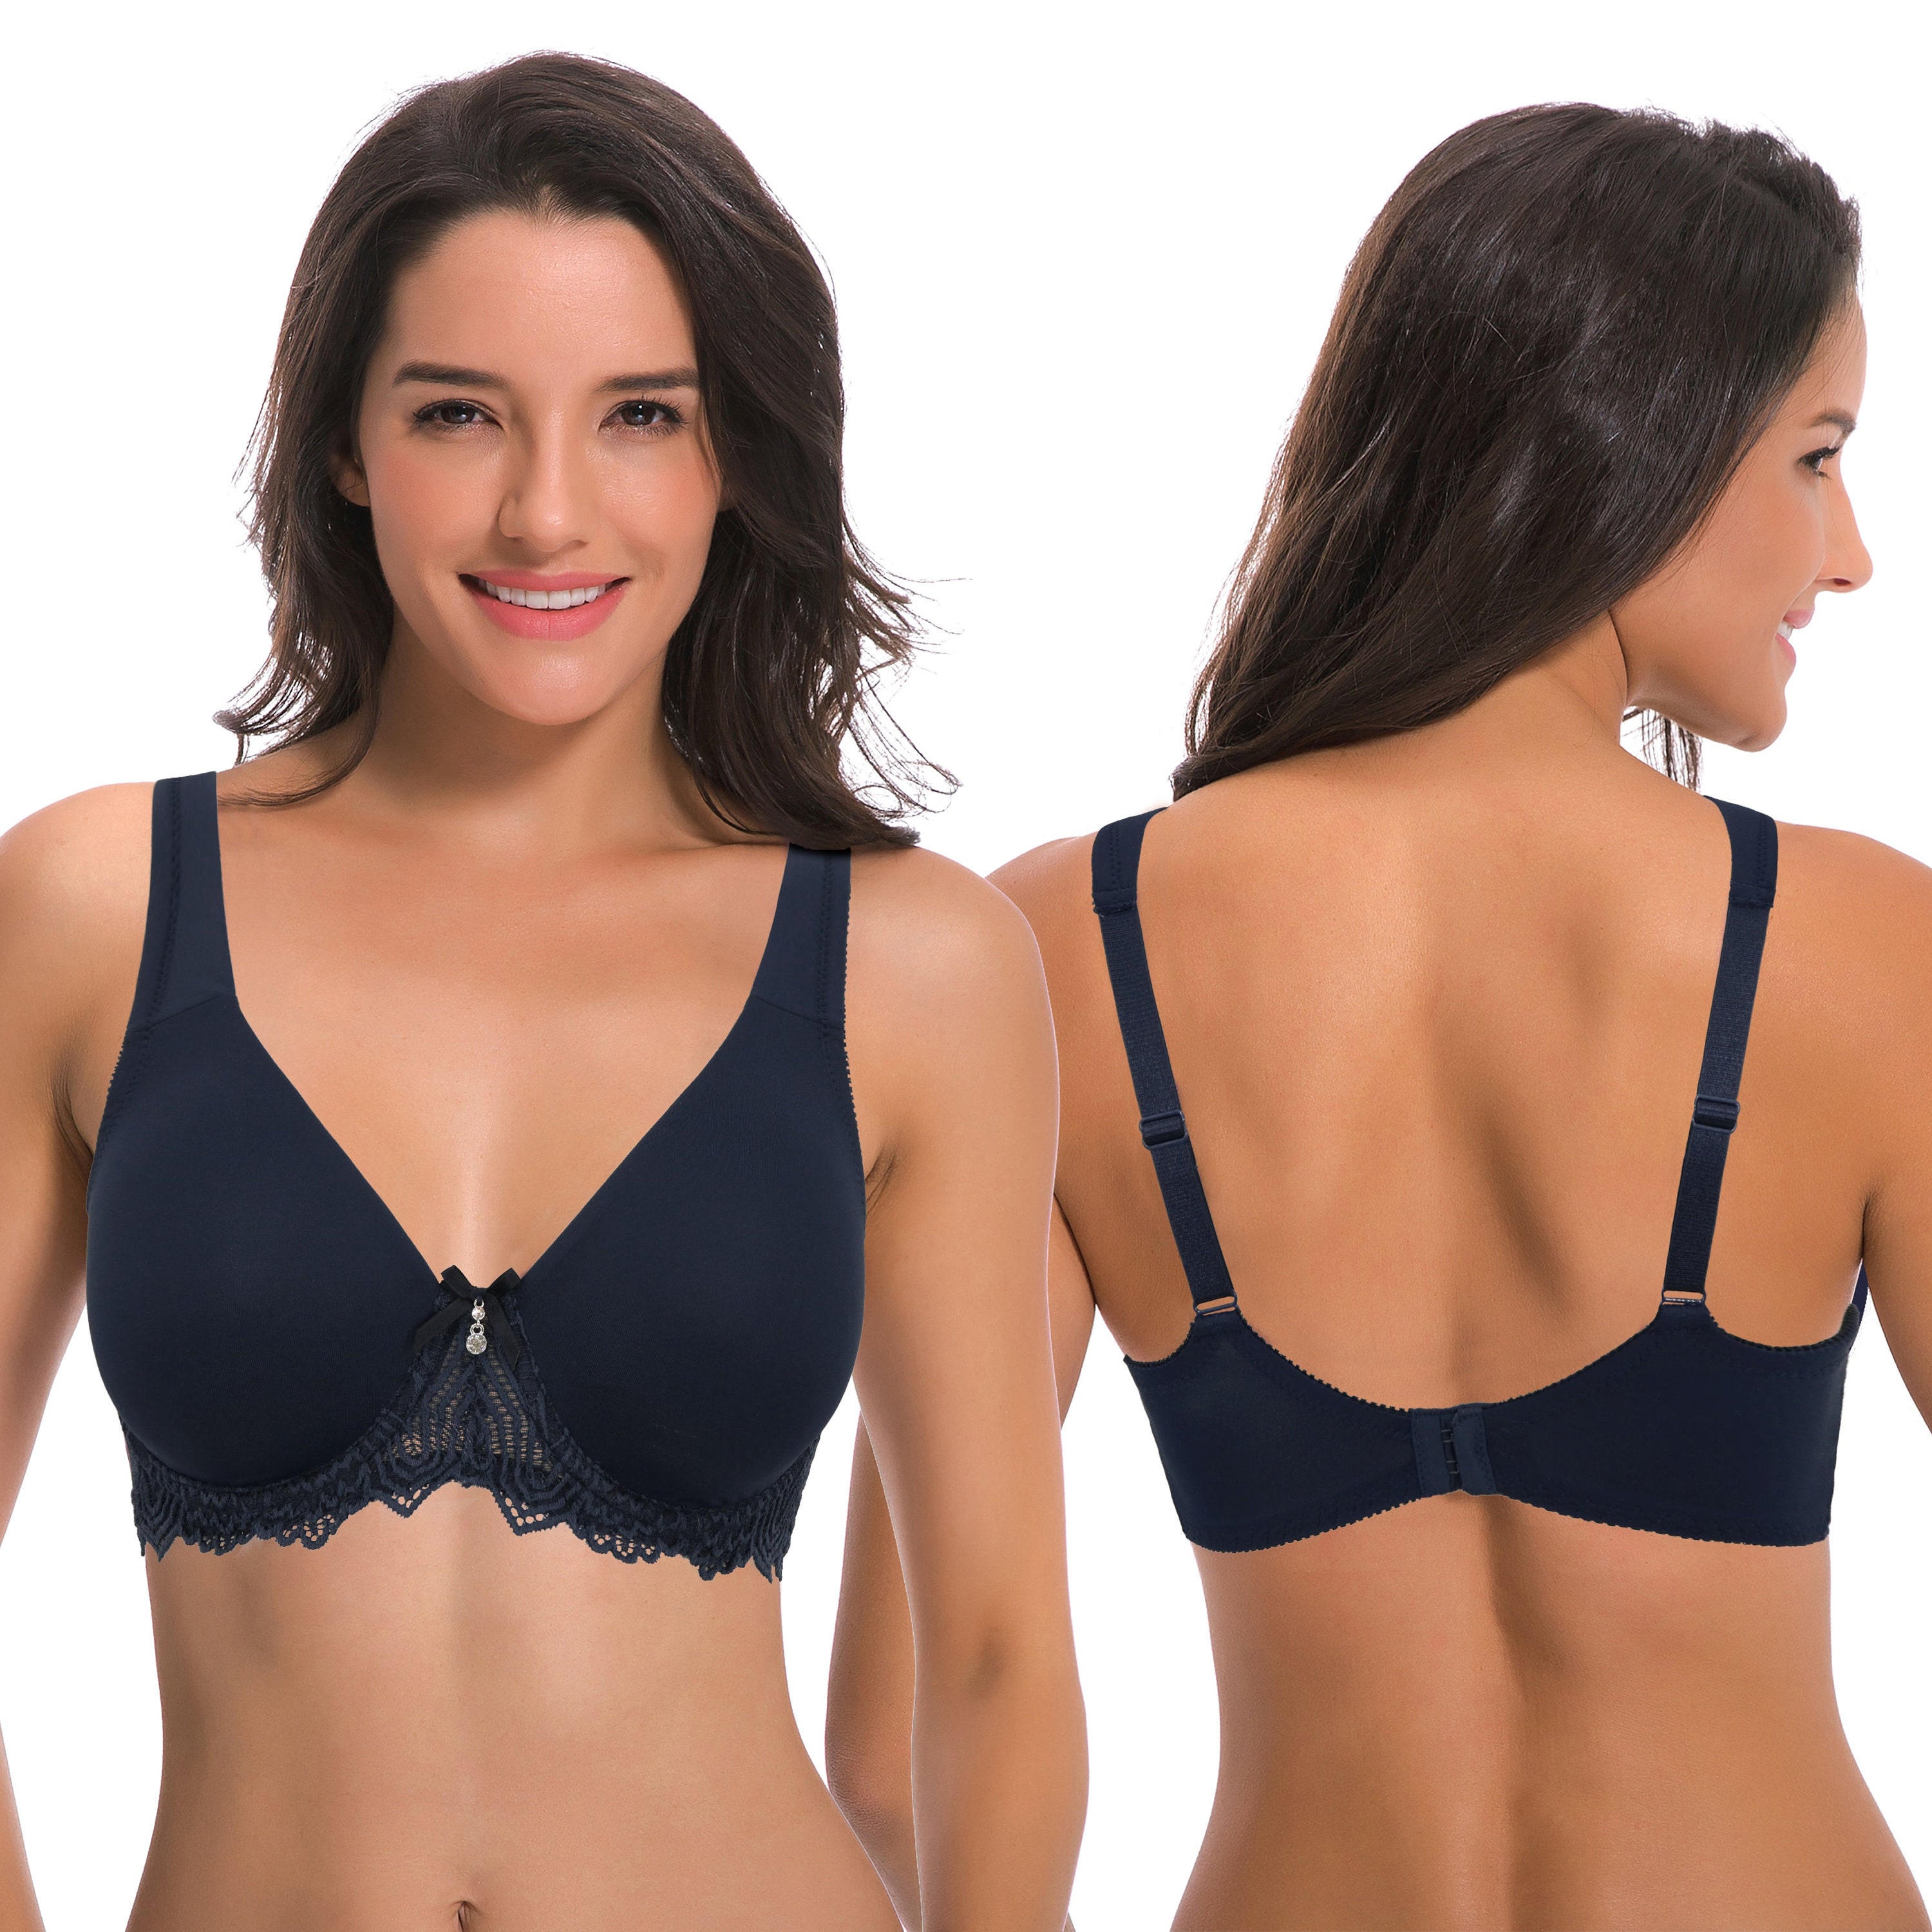 Women's Plus Size Push Up Add 1 Cup Underwire Perfect Shape Lace Bras-2Pk